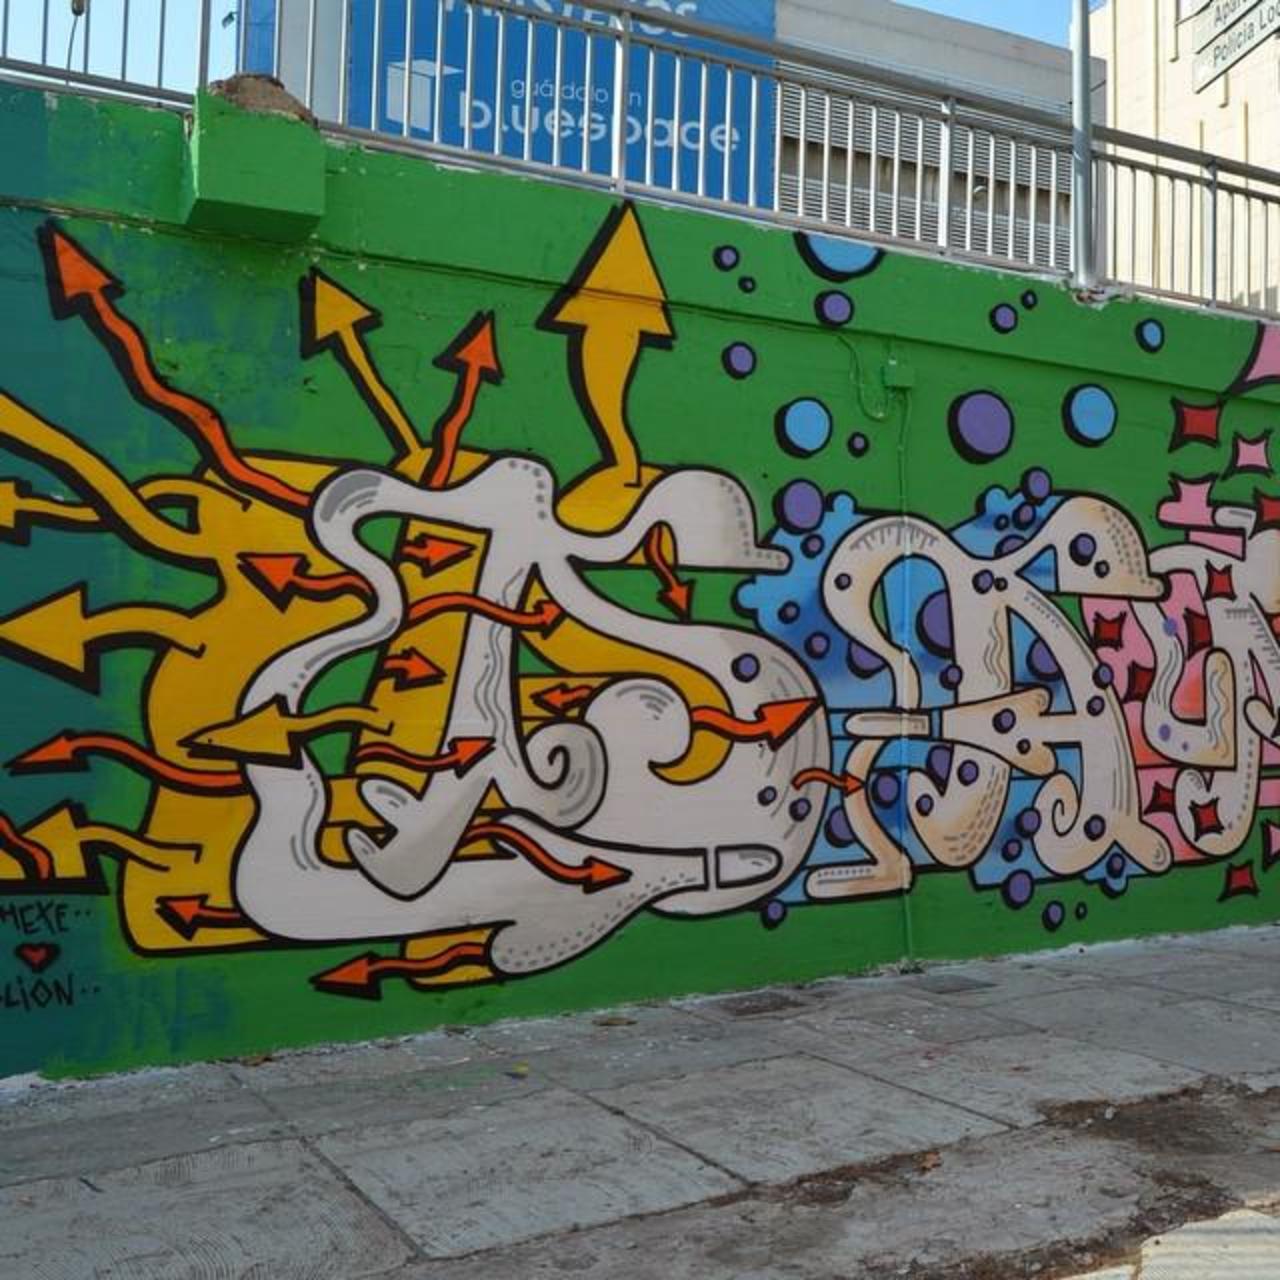 via #dam_trs "http://bit.ly/1LuAS8W" #graffiti #streetart http://t.co/bUuy3KzITq